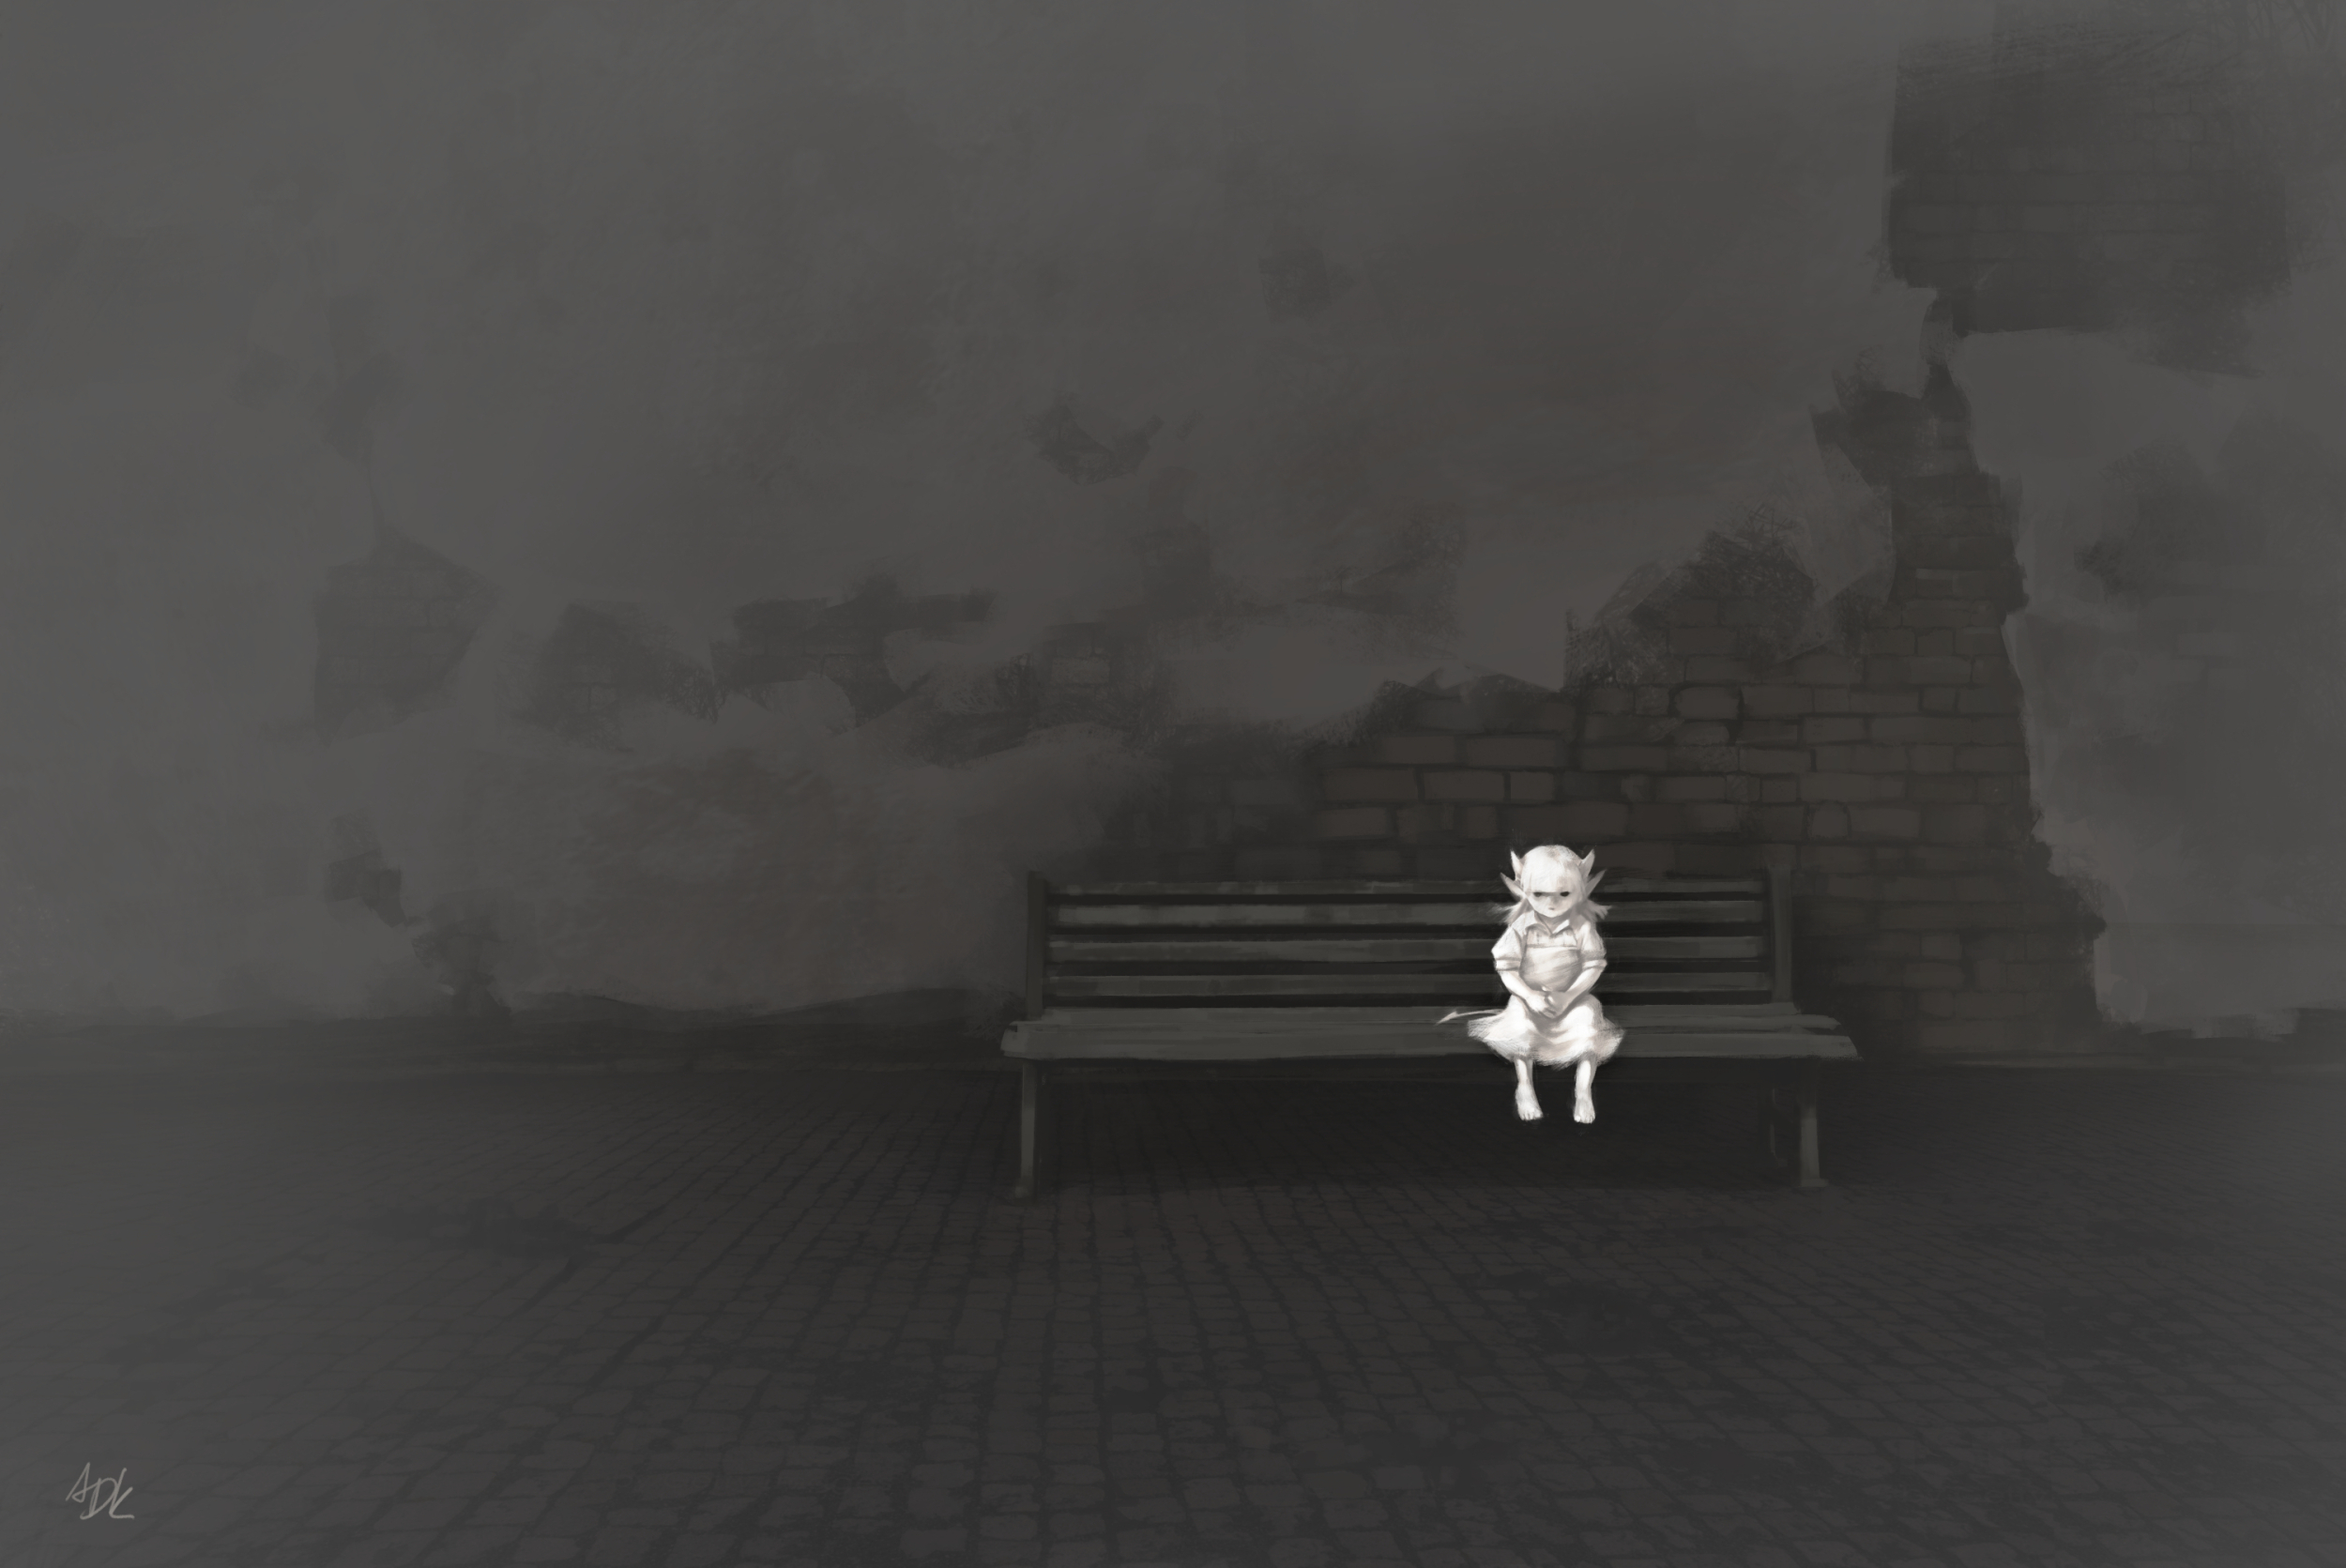 BA Games Art work by Anna Kissh depicting a white, ghost-like creature in a dark environment.